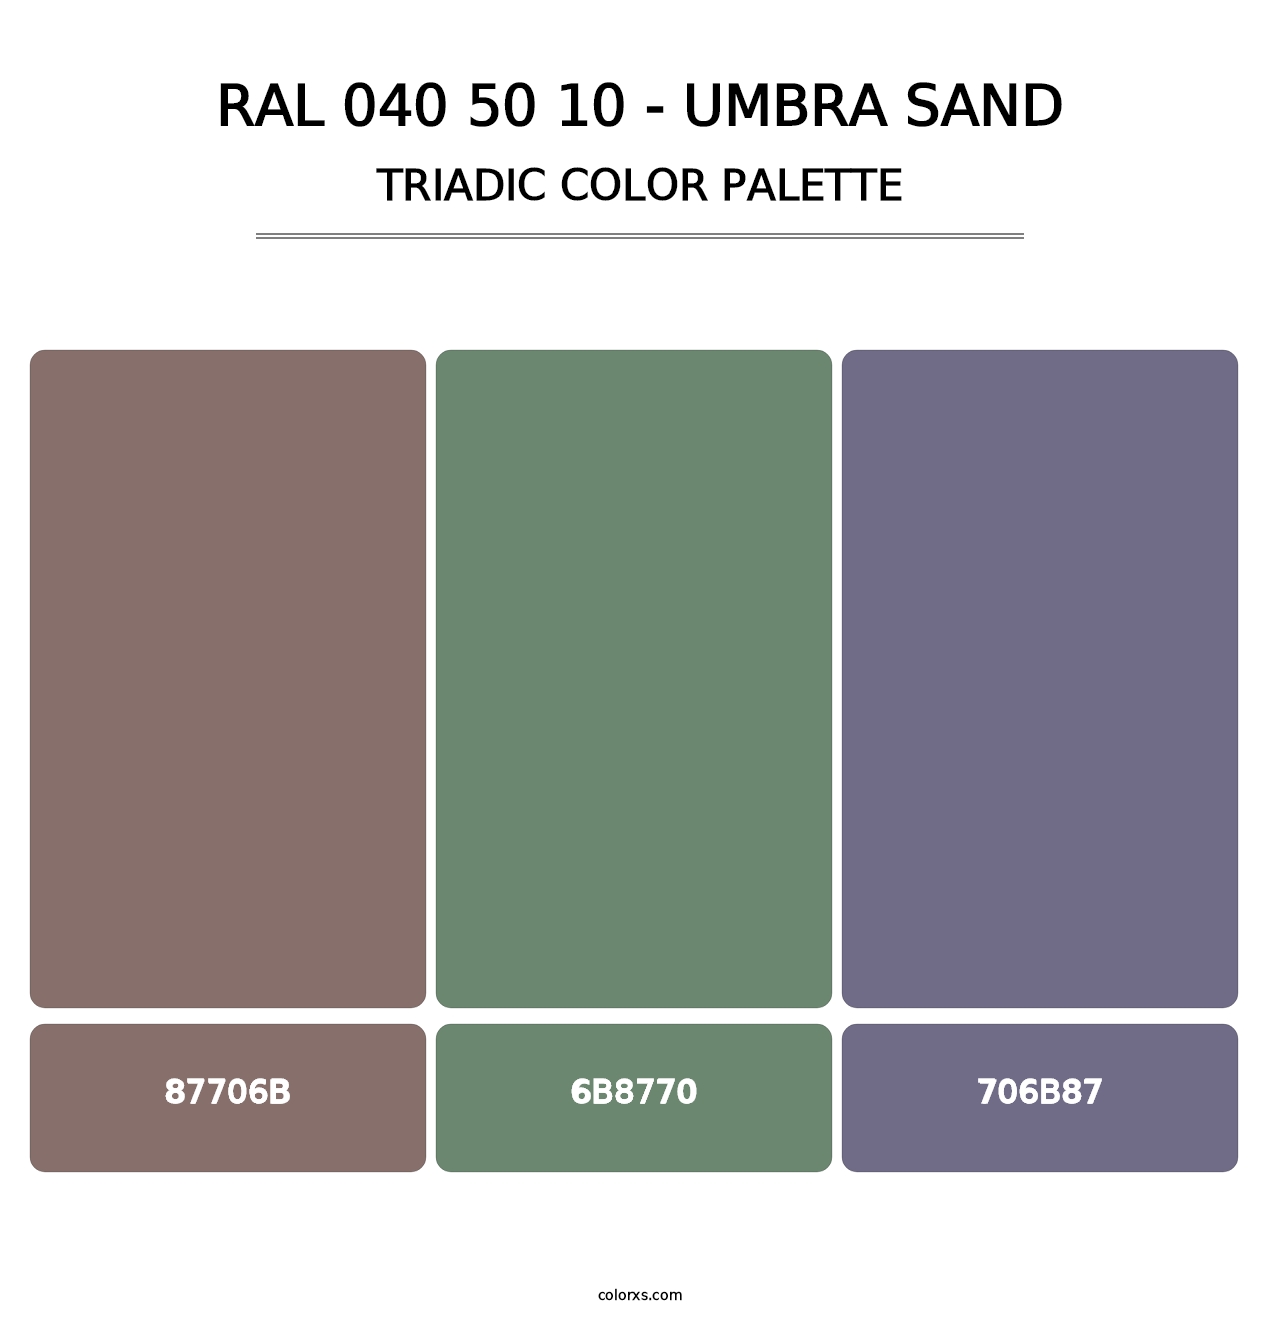 RAL 040 50 10 - Umbra Sand - Triadic Color Palette